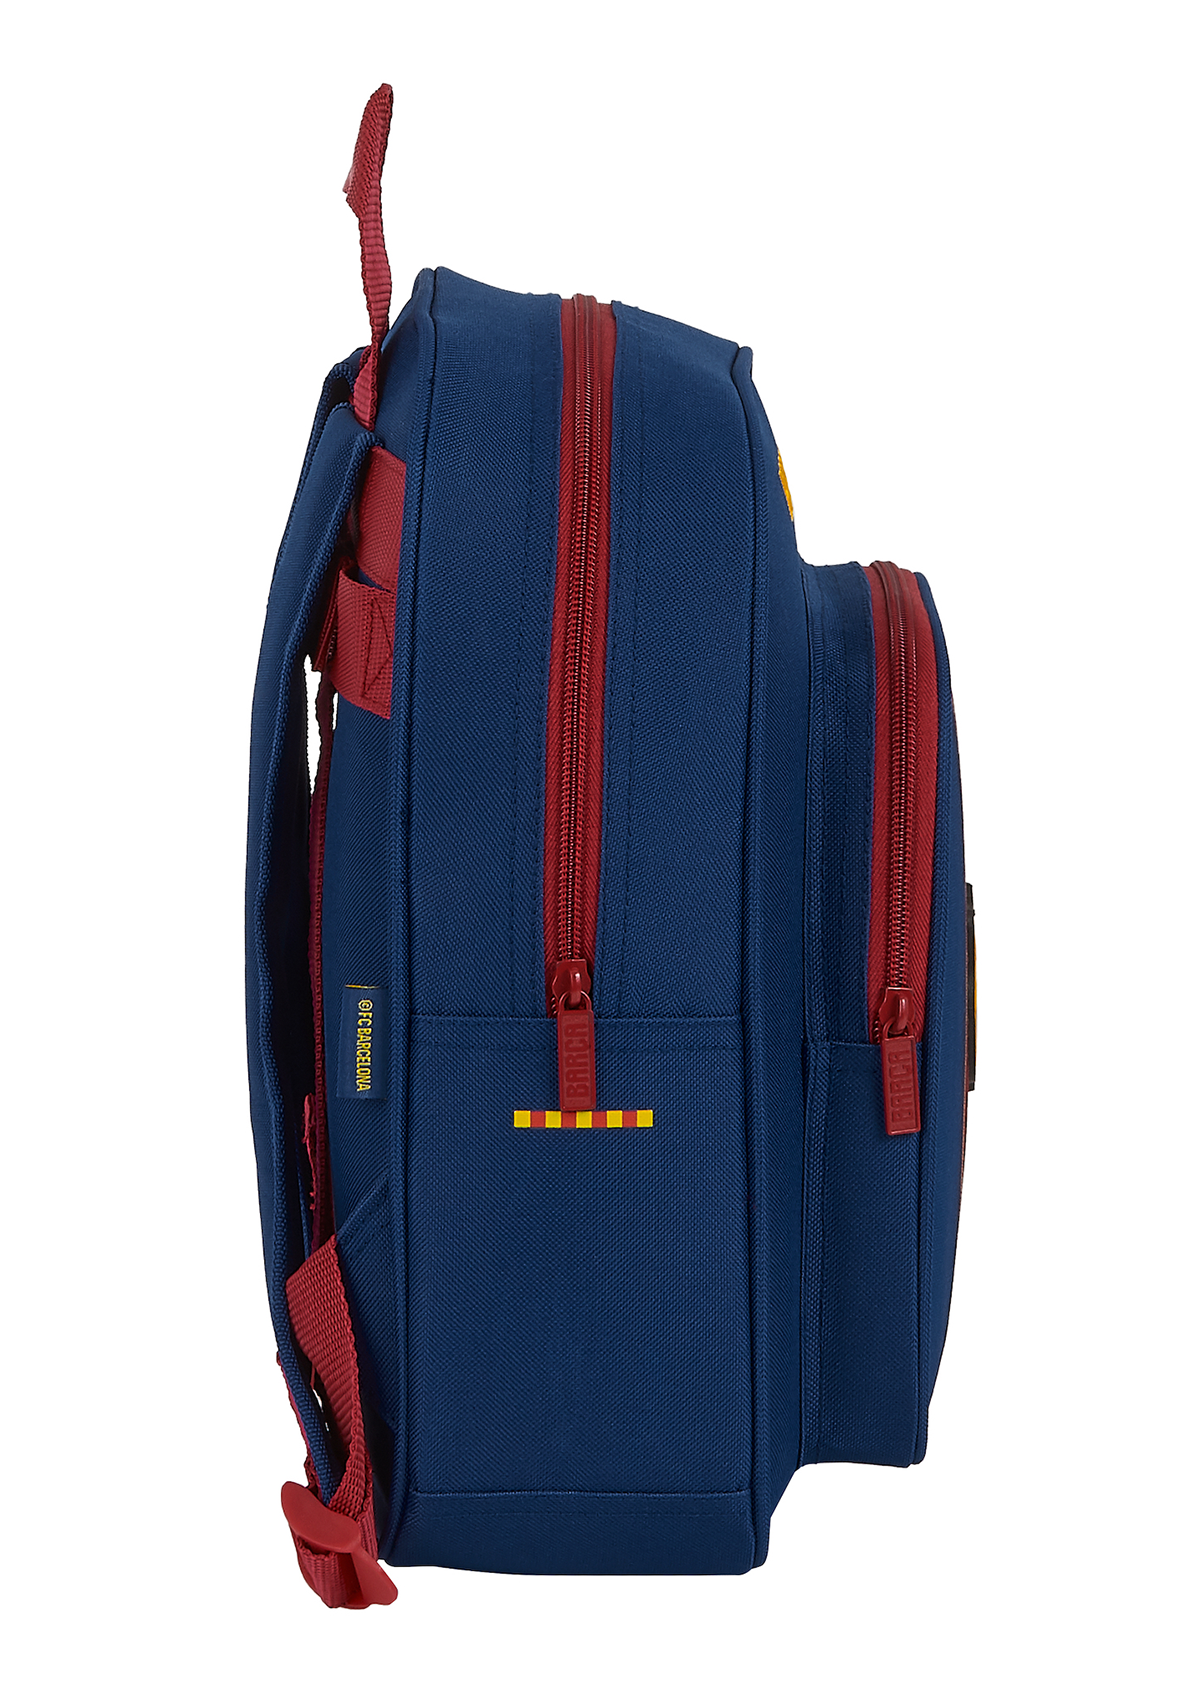 FC Barcelona Small Backpack